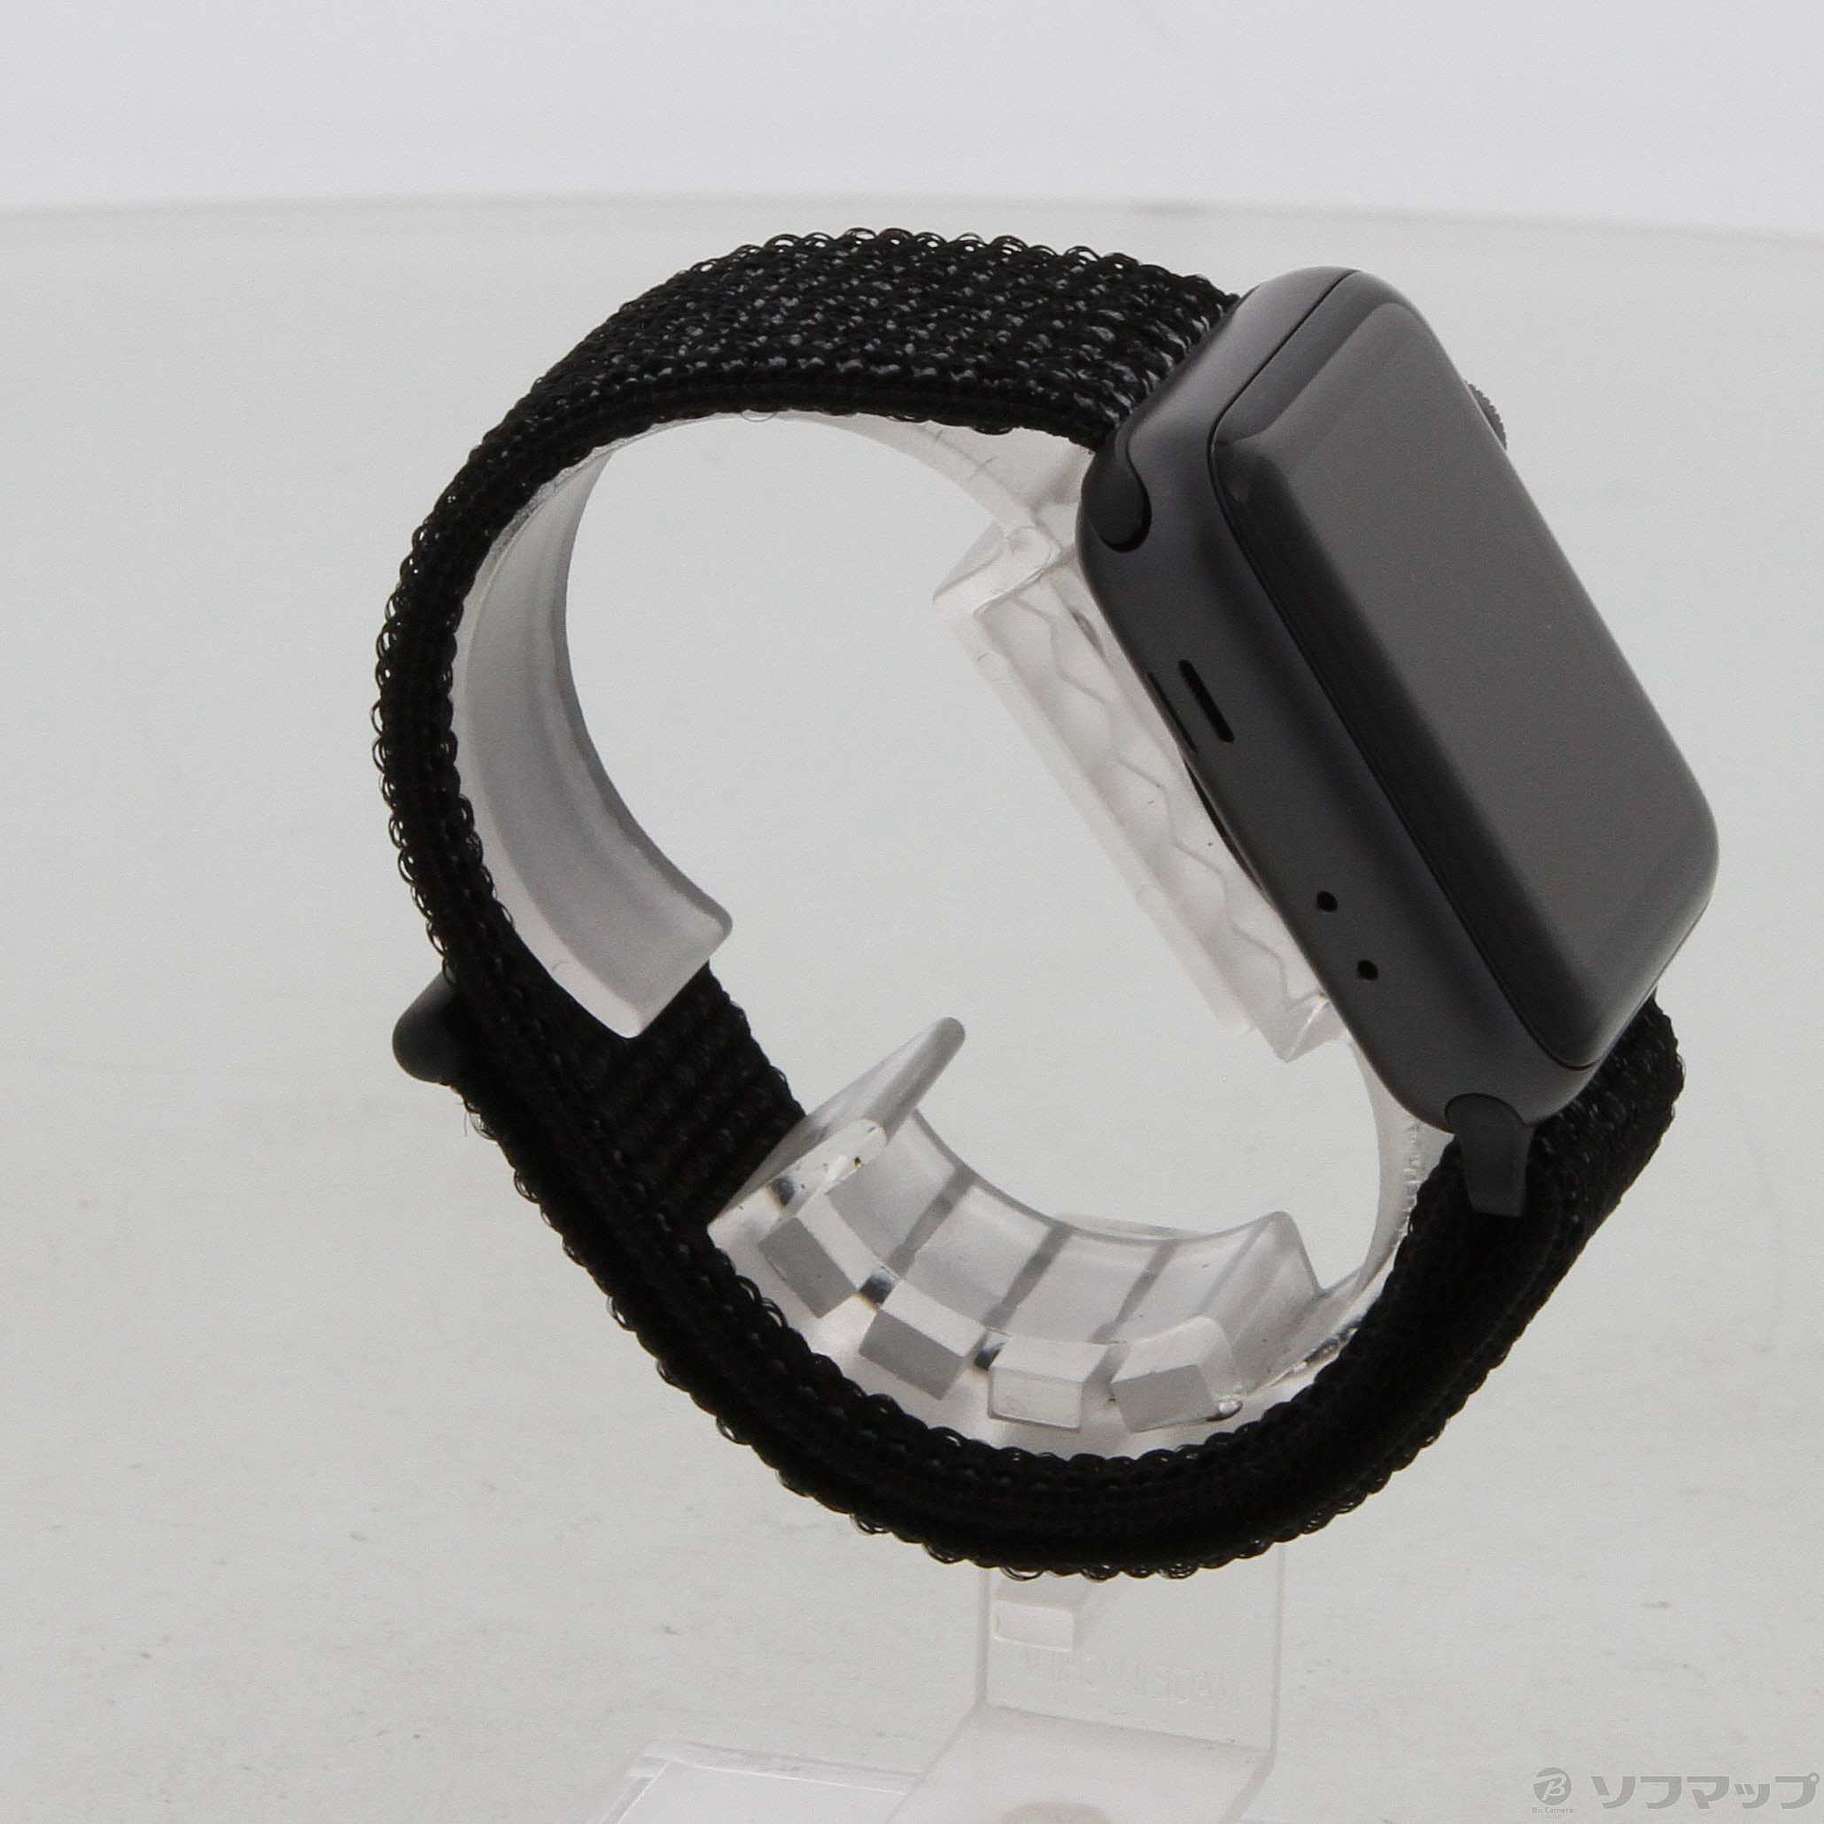 Apple Watch Series 3 Nike+ GPS + Cellular 38mm スペースグレイアルミニウムケース  ブラック／ピュアプラチナNikeスポーツループ